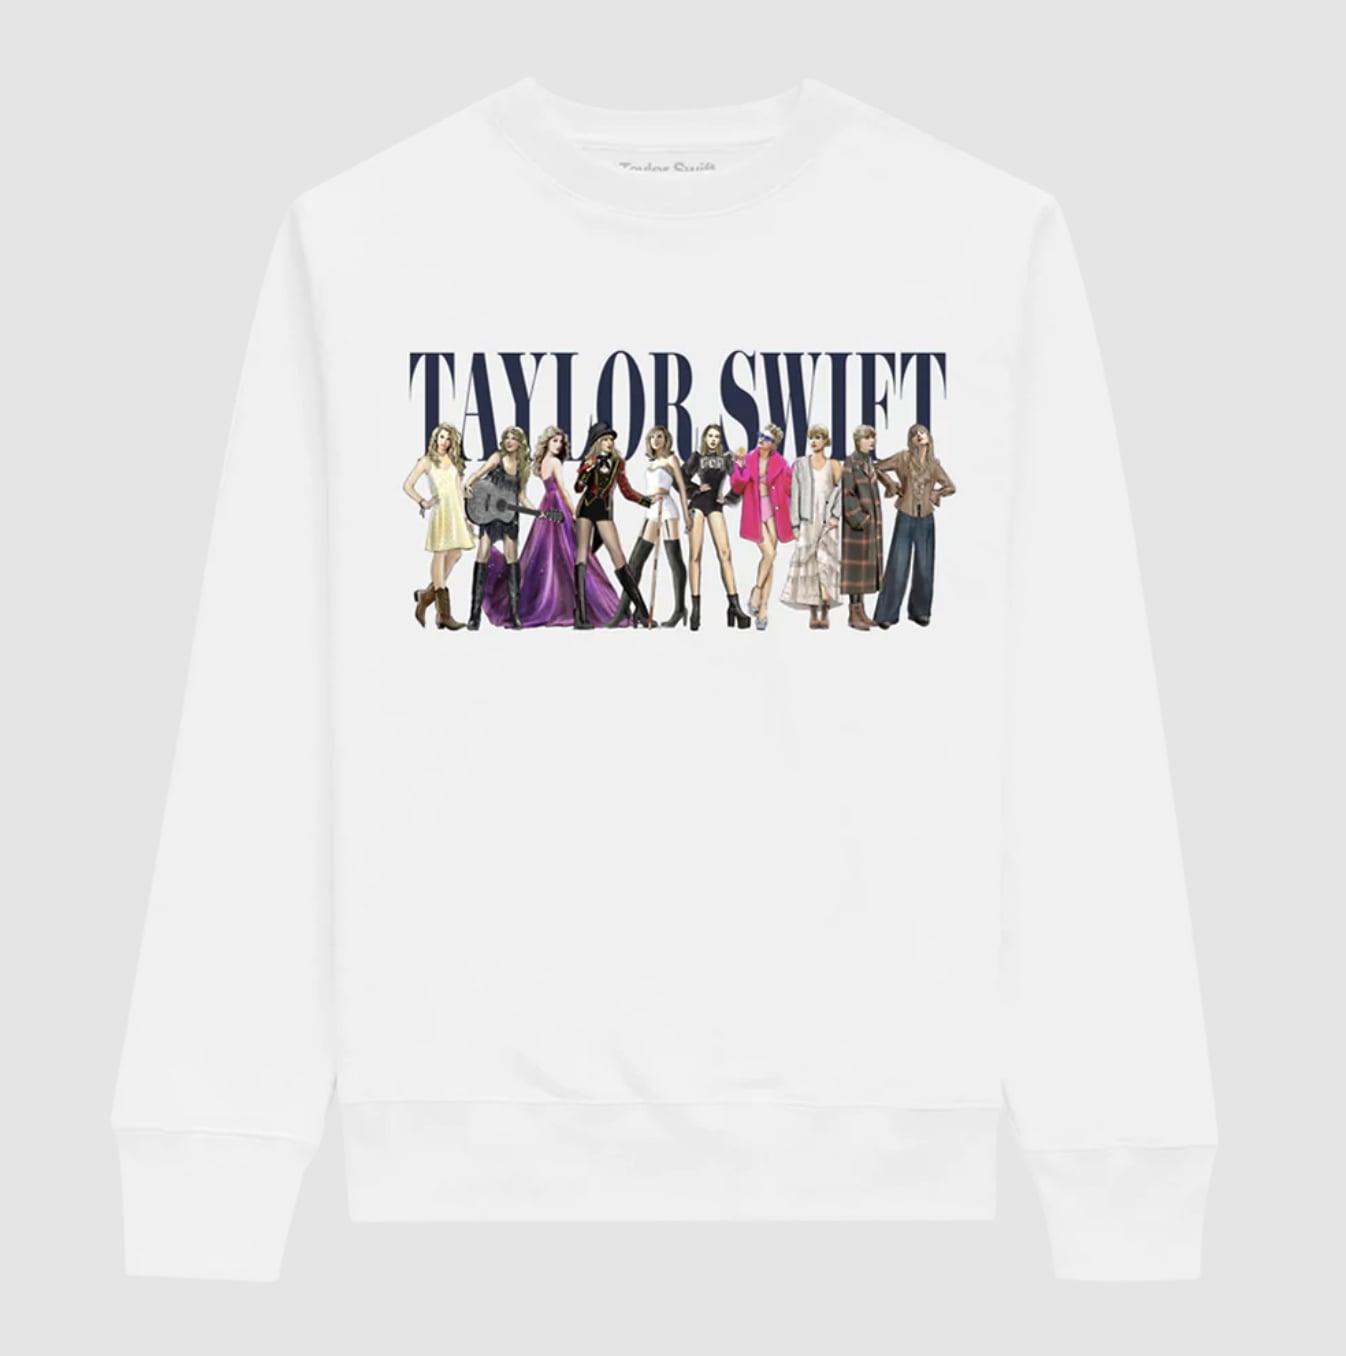 Taylor Swift The Eras Tour Merch TShirts Listentee lupon.gov.ph